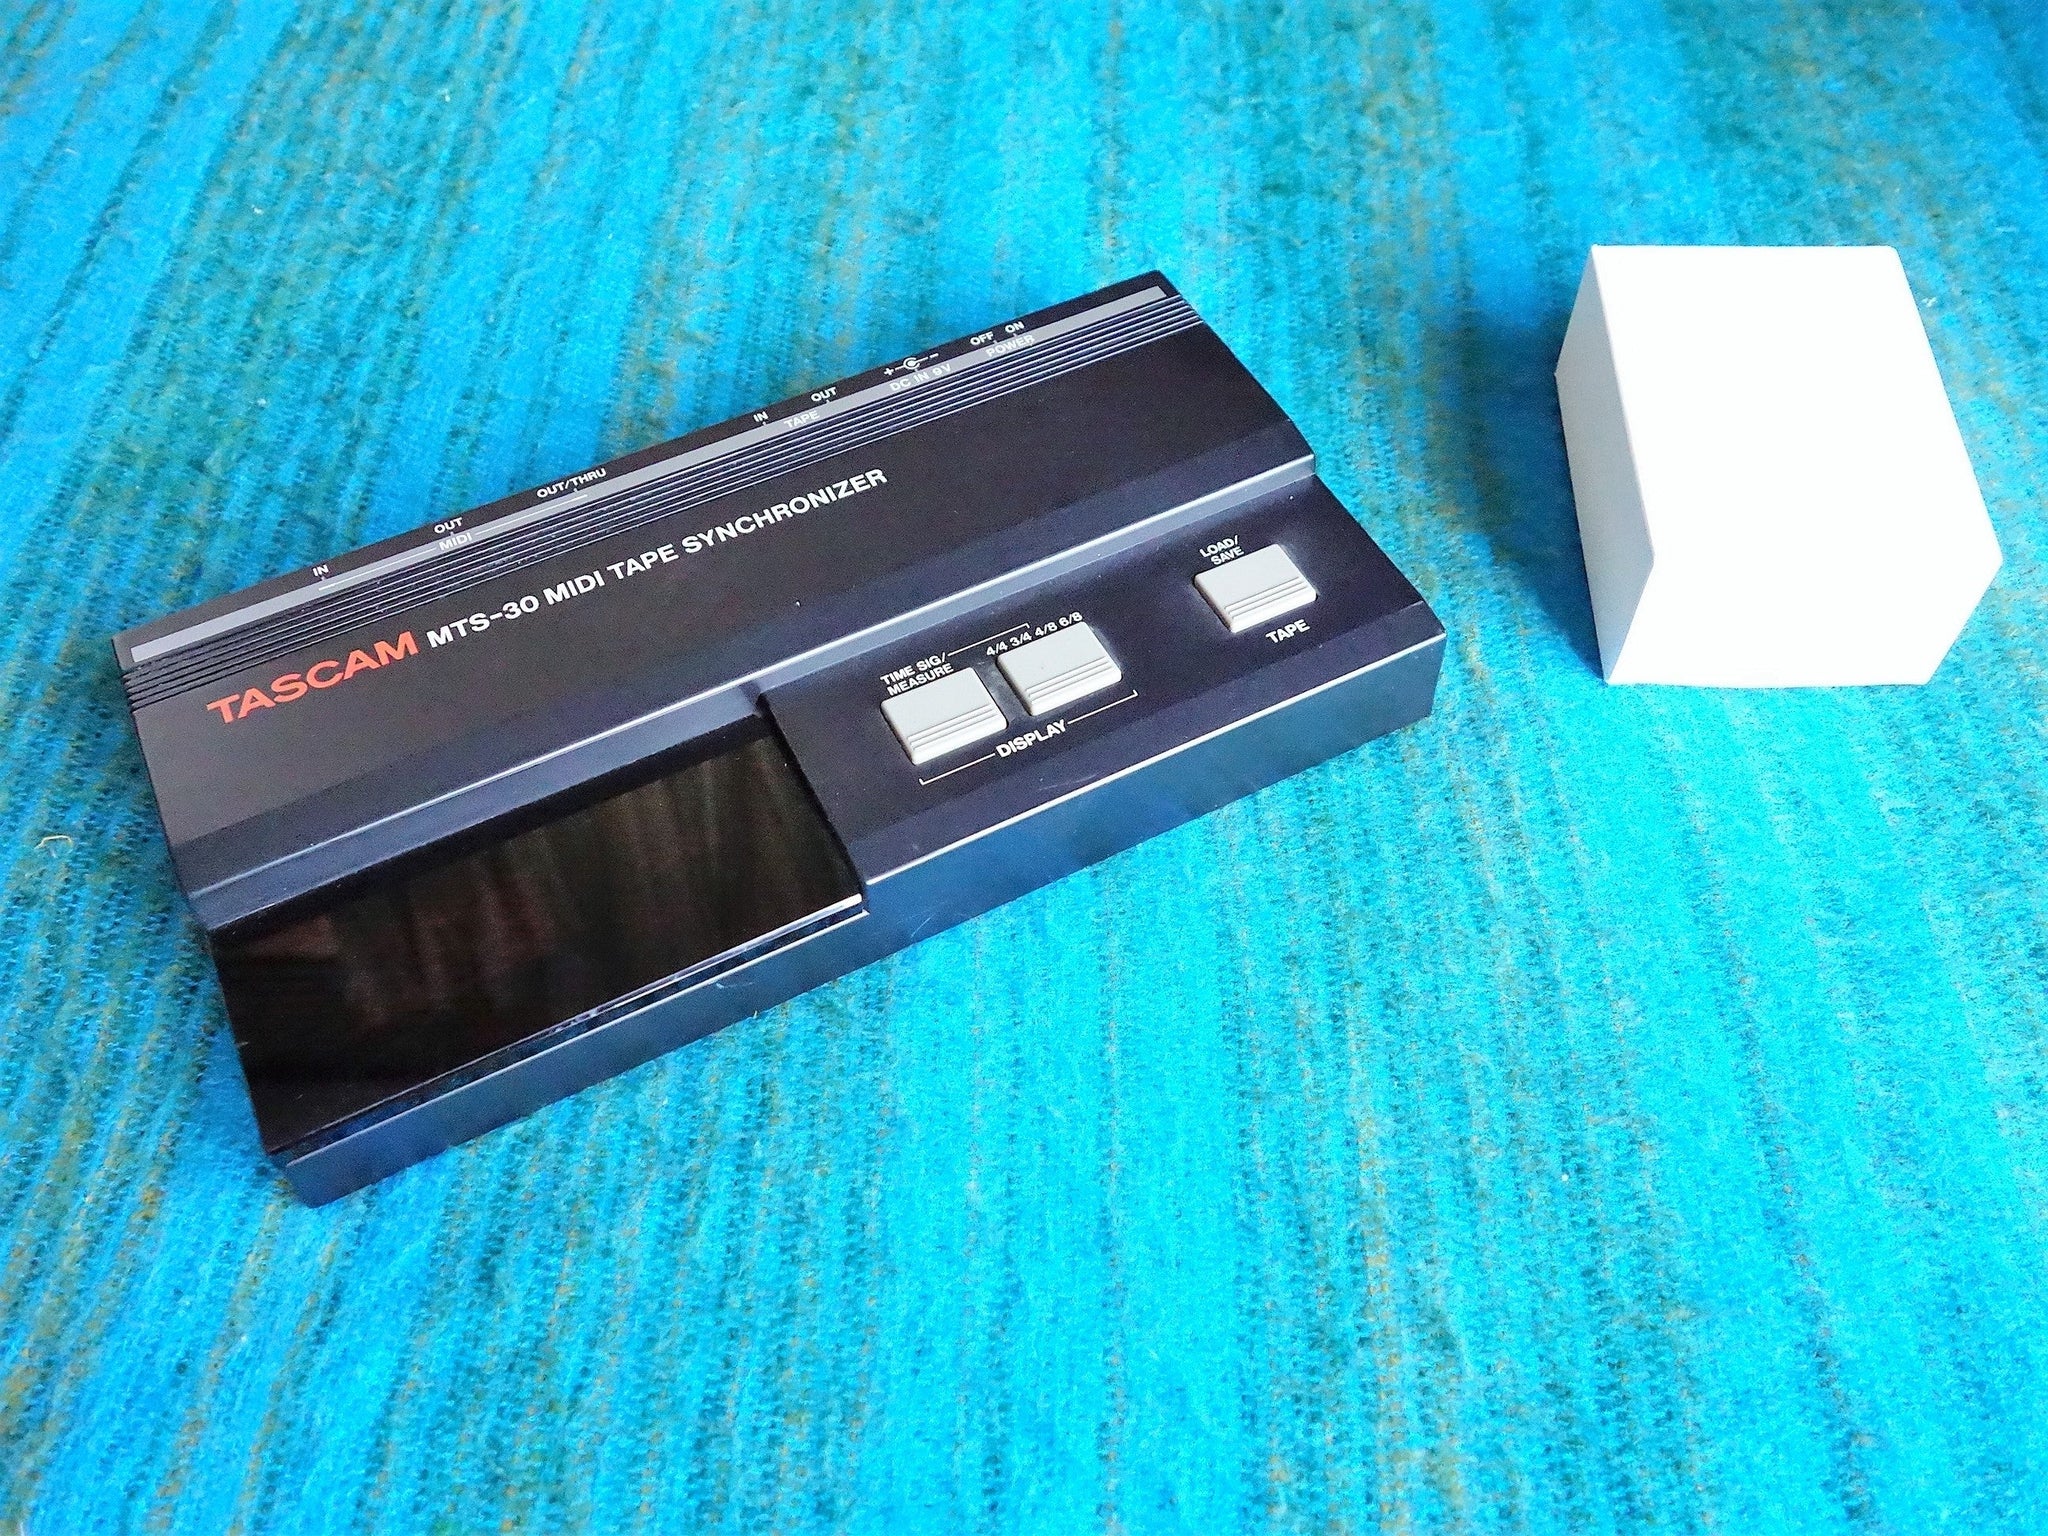 Tascam MTS-30 Midi Tape Synchronizer w/ AC Adapter - 80's Vintage - H031